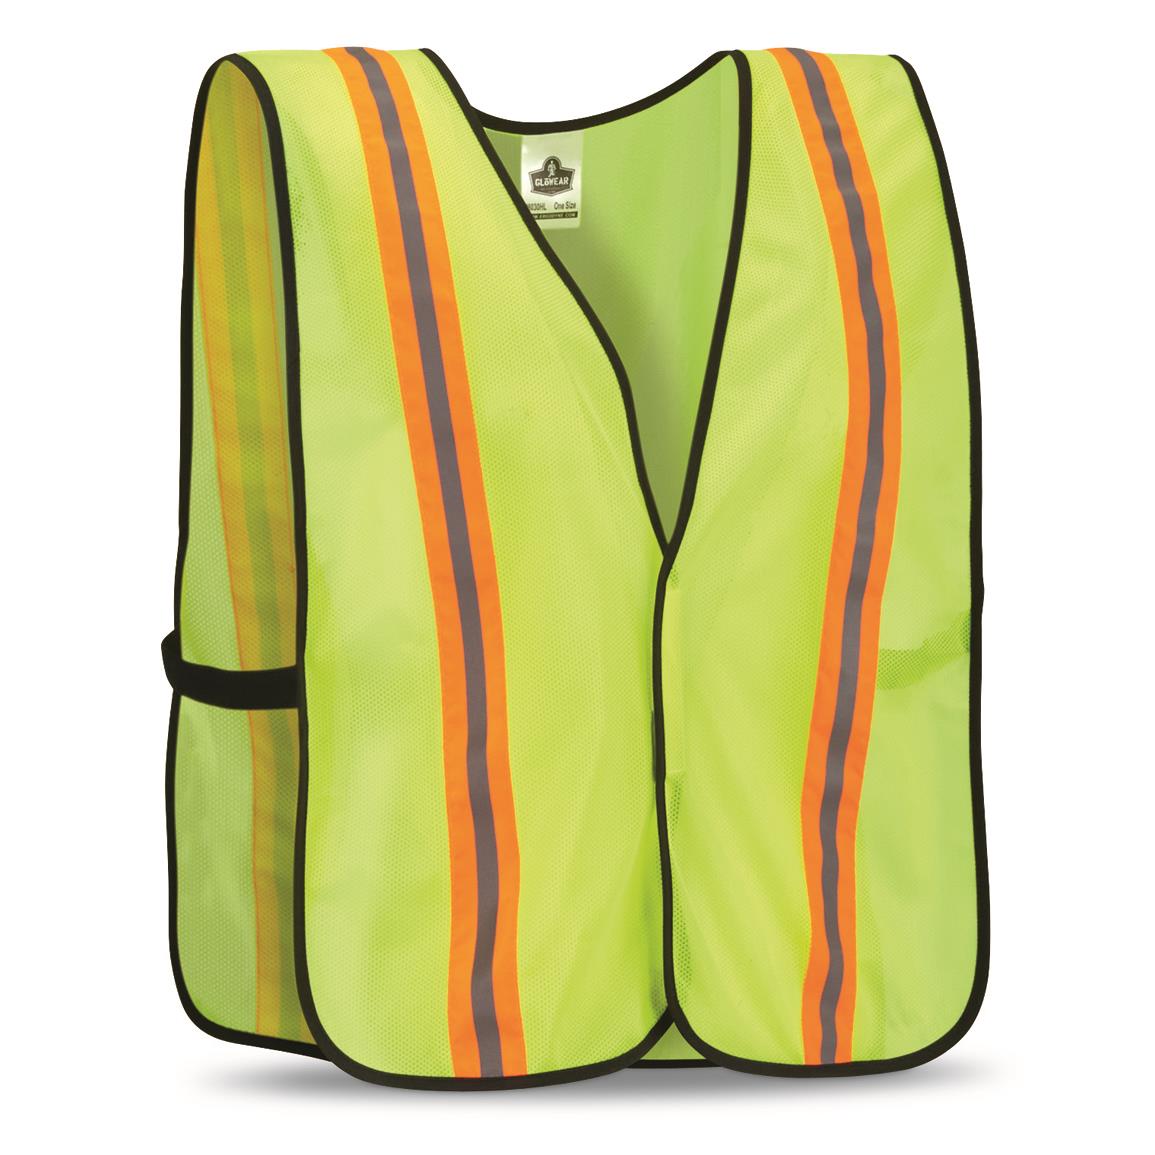 U.S. Municipal Surplus Ergodyne Hi Vis Safety Vests, 4 Pack, New, Hi-Vis Yellow